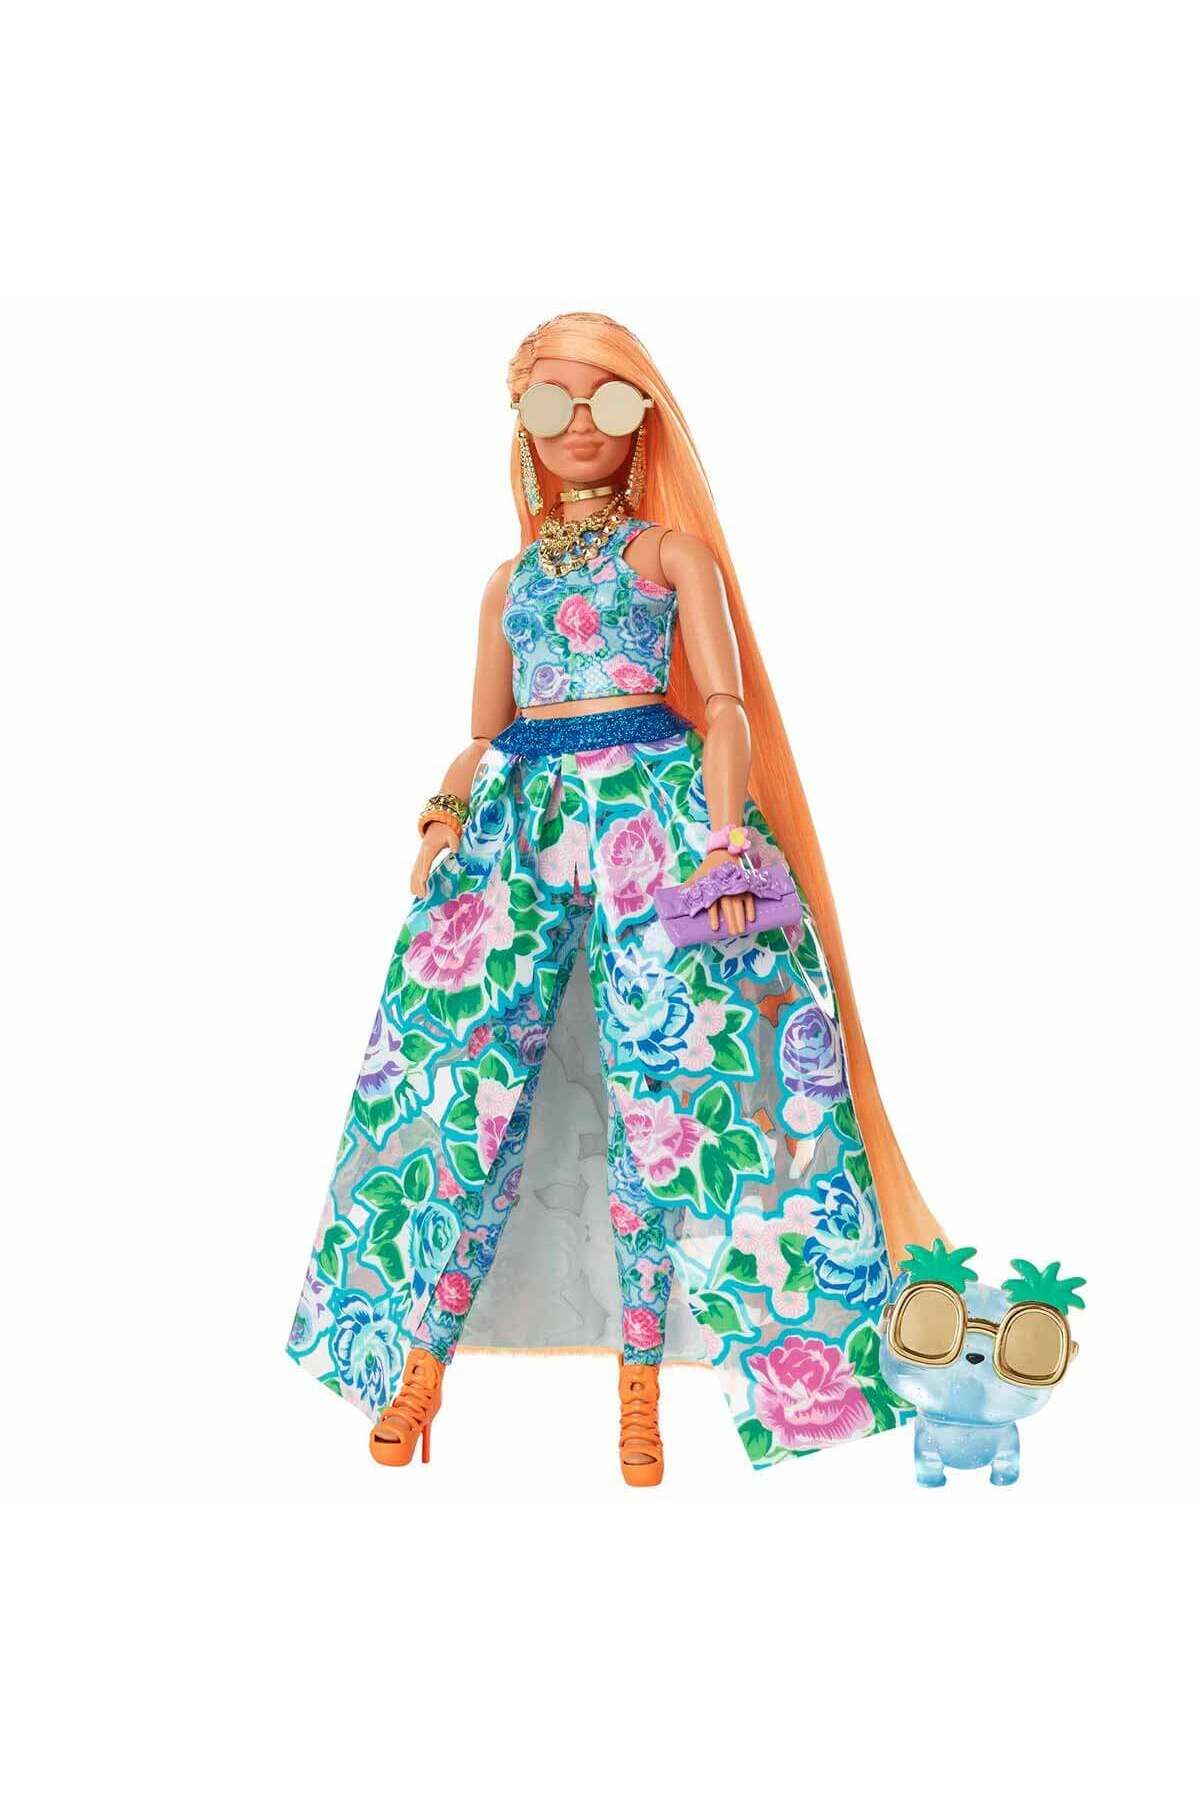 Barbie Akdenizpos Co01 Hhn14 Extra Fancy - Çiçekli Kostümlü Bebek (Yeni)